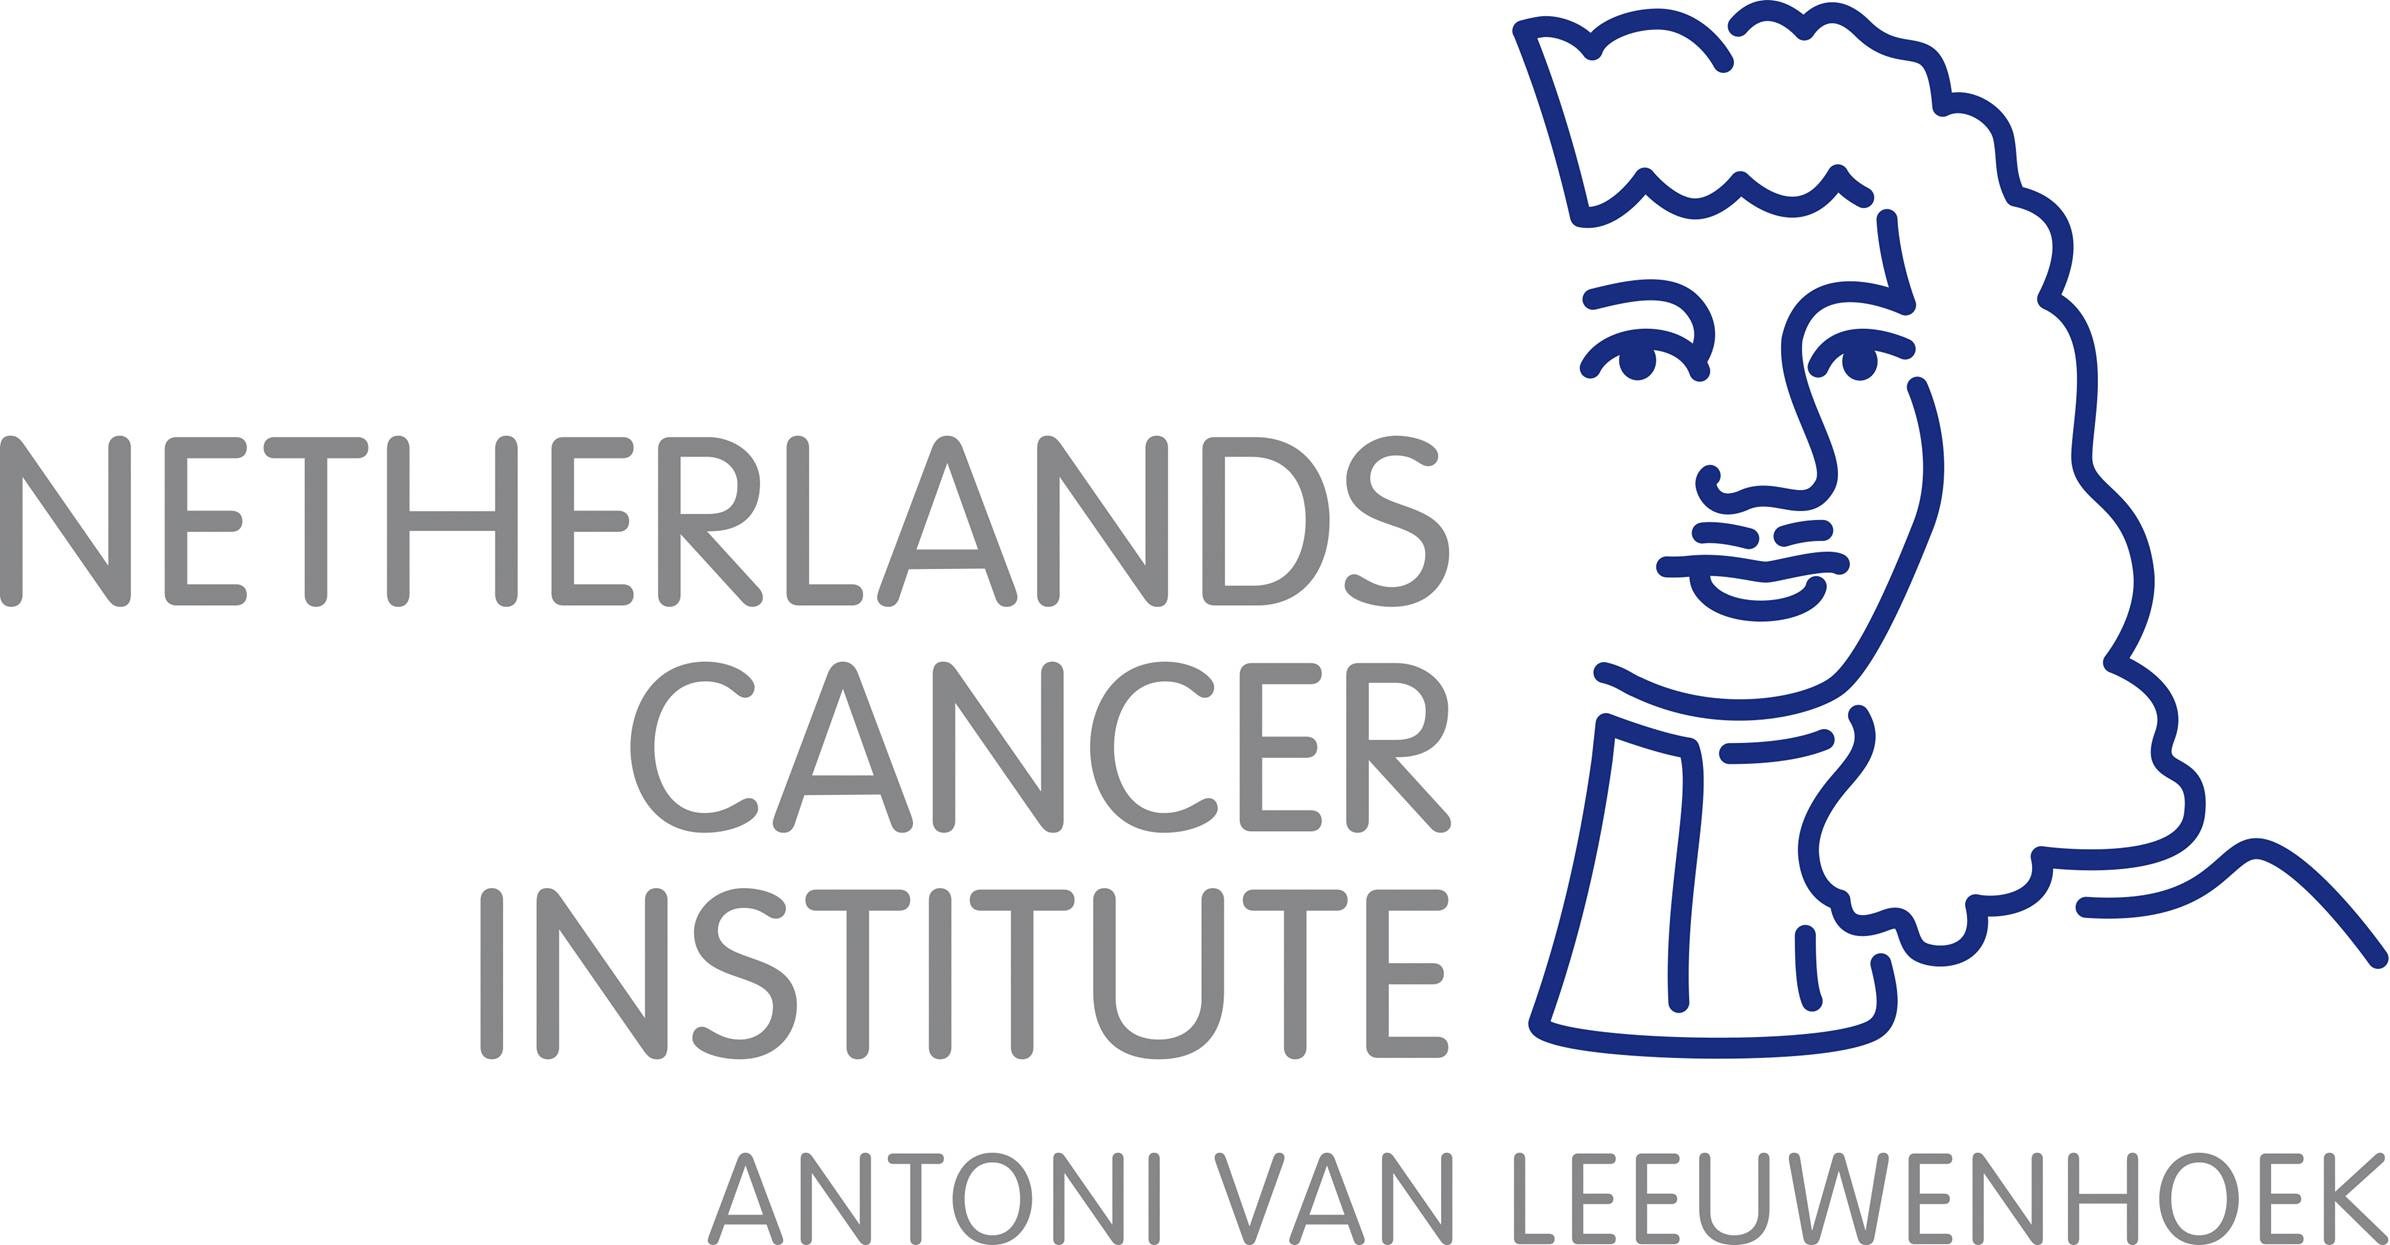 Netherlands Cancer Institute (NKI) logo